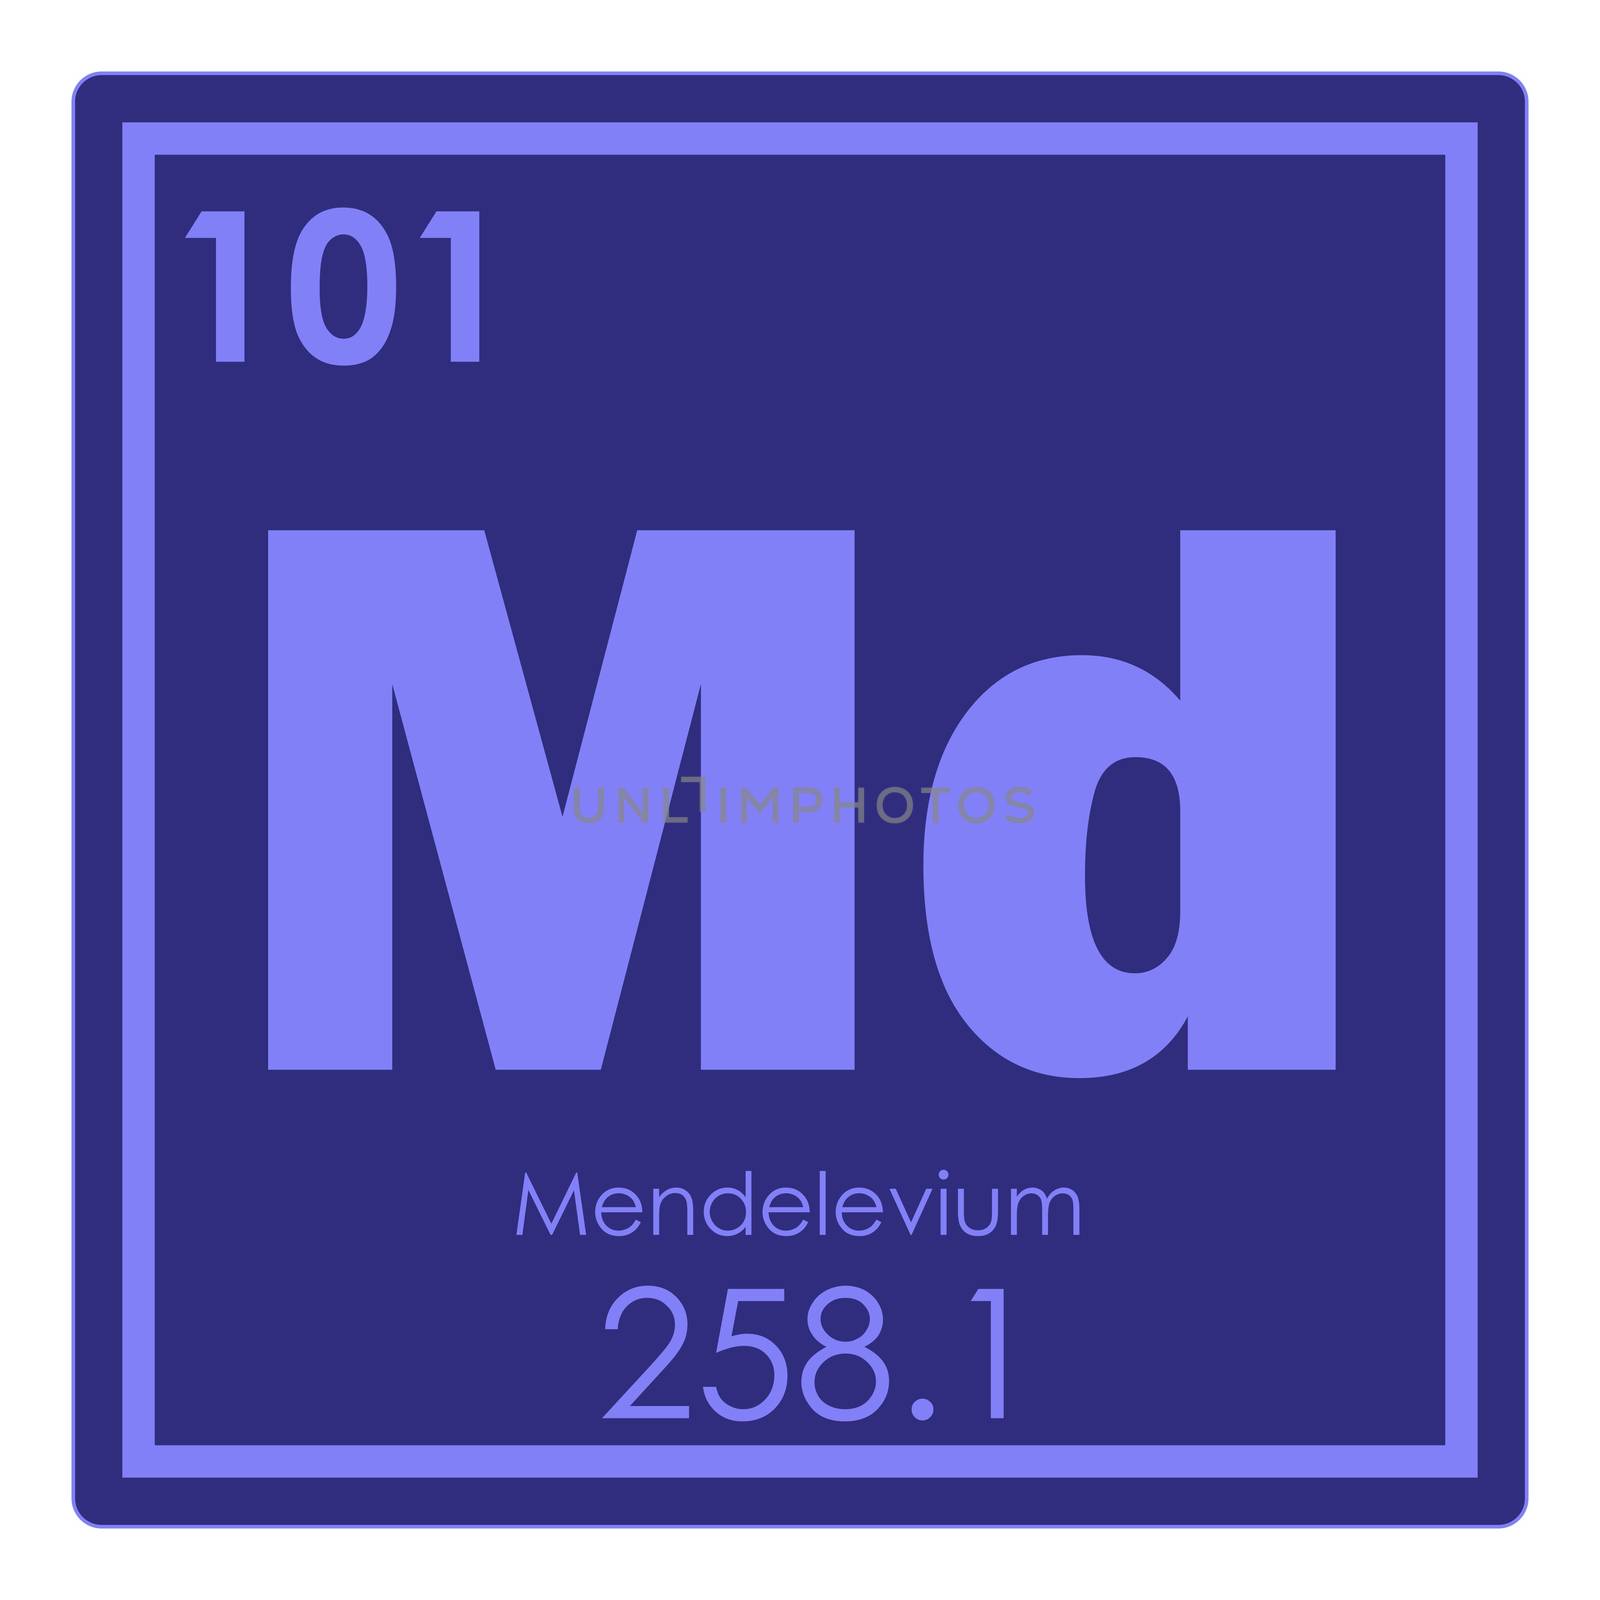 Mendelevium chemical element by tony4urban